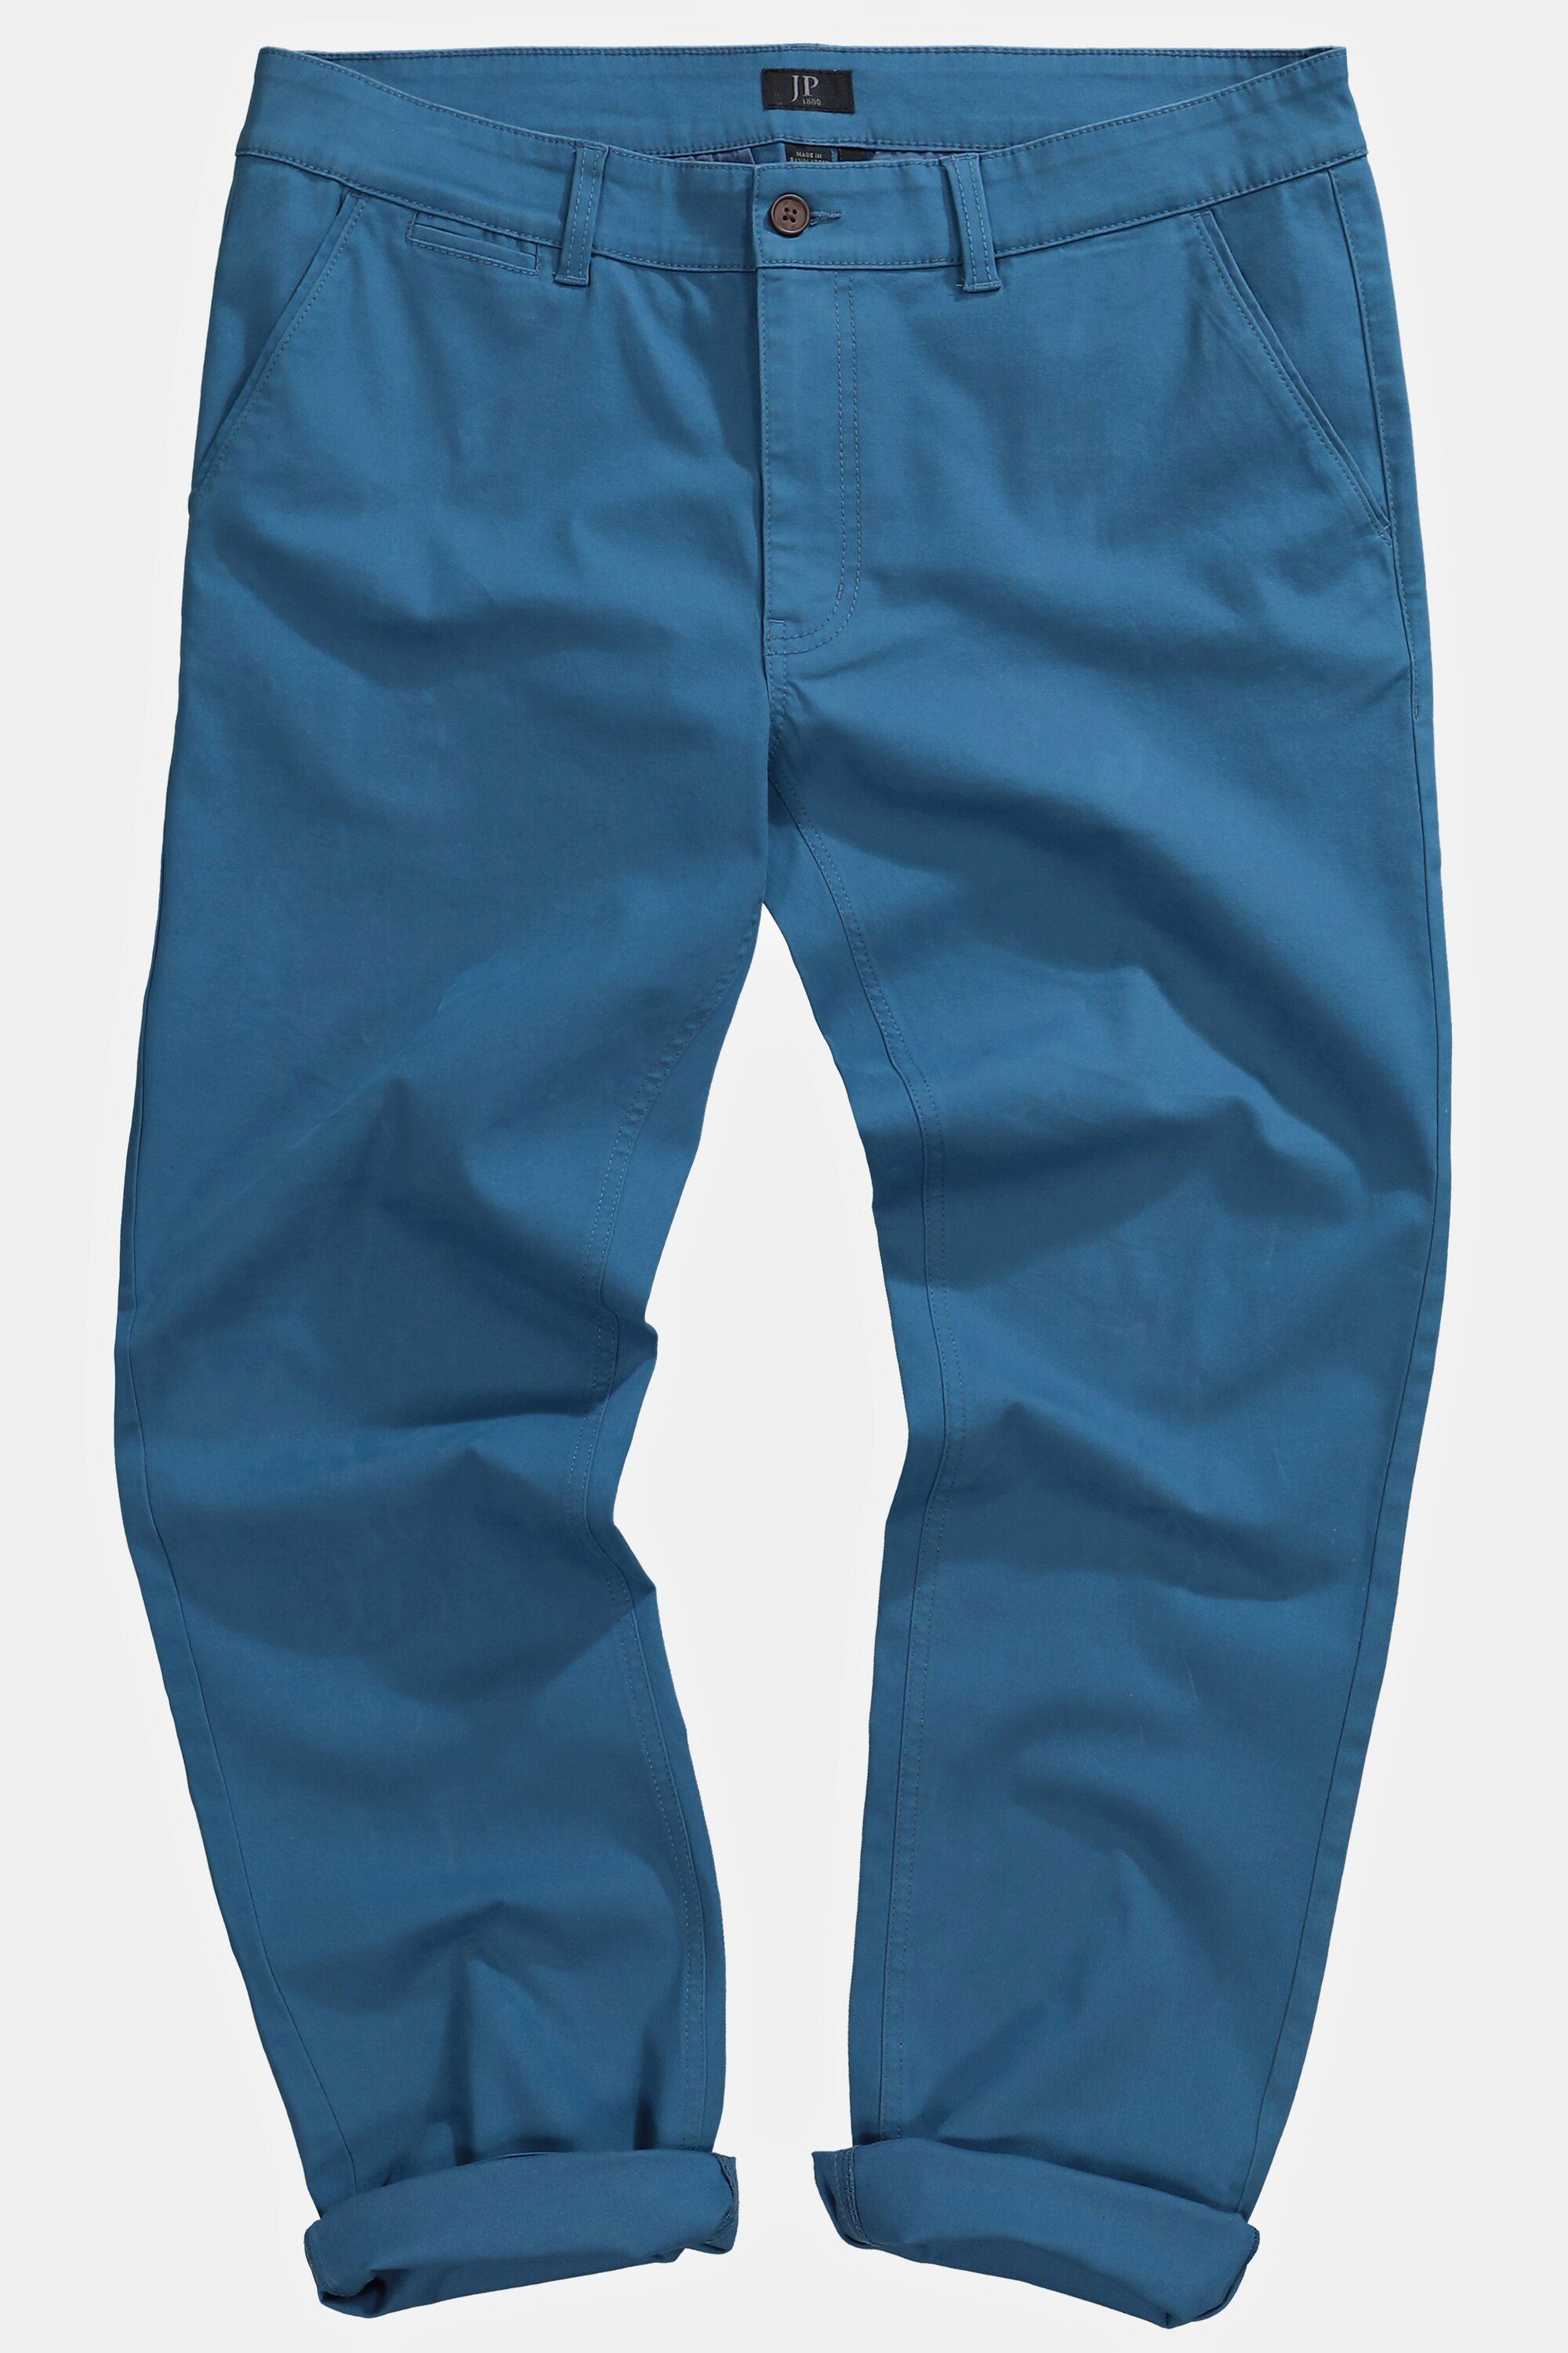 JP1880 Chinohose Chino Hose Bauch Fit 4-Pocket blue denim FLEXNAMIC®